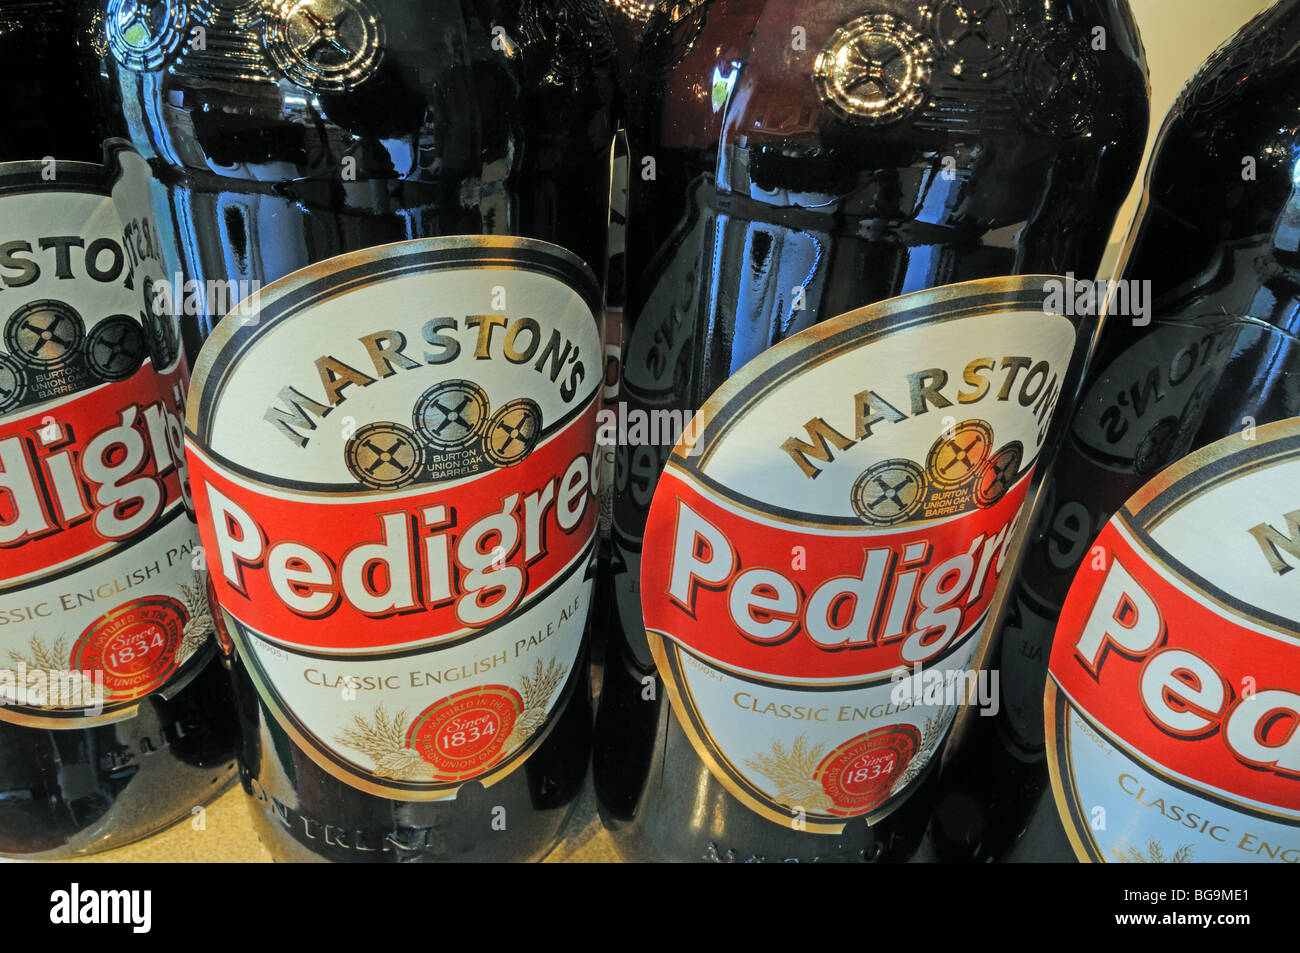 Marstons Pedigree di birra in bottiglia Foto Stock